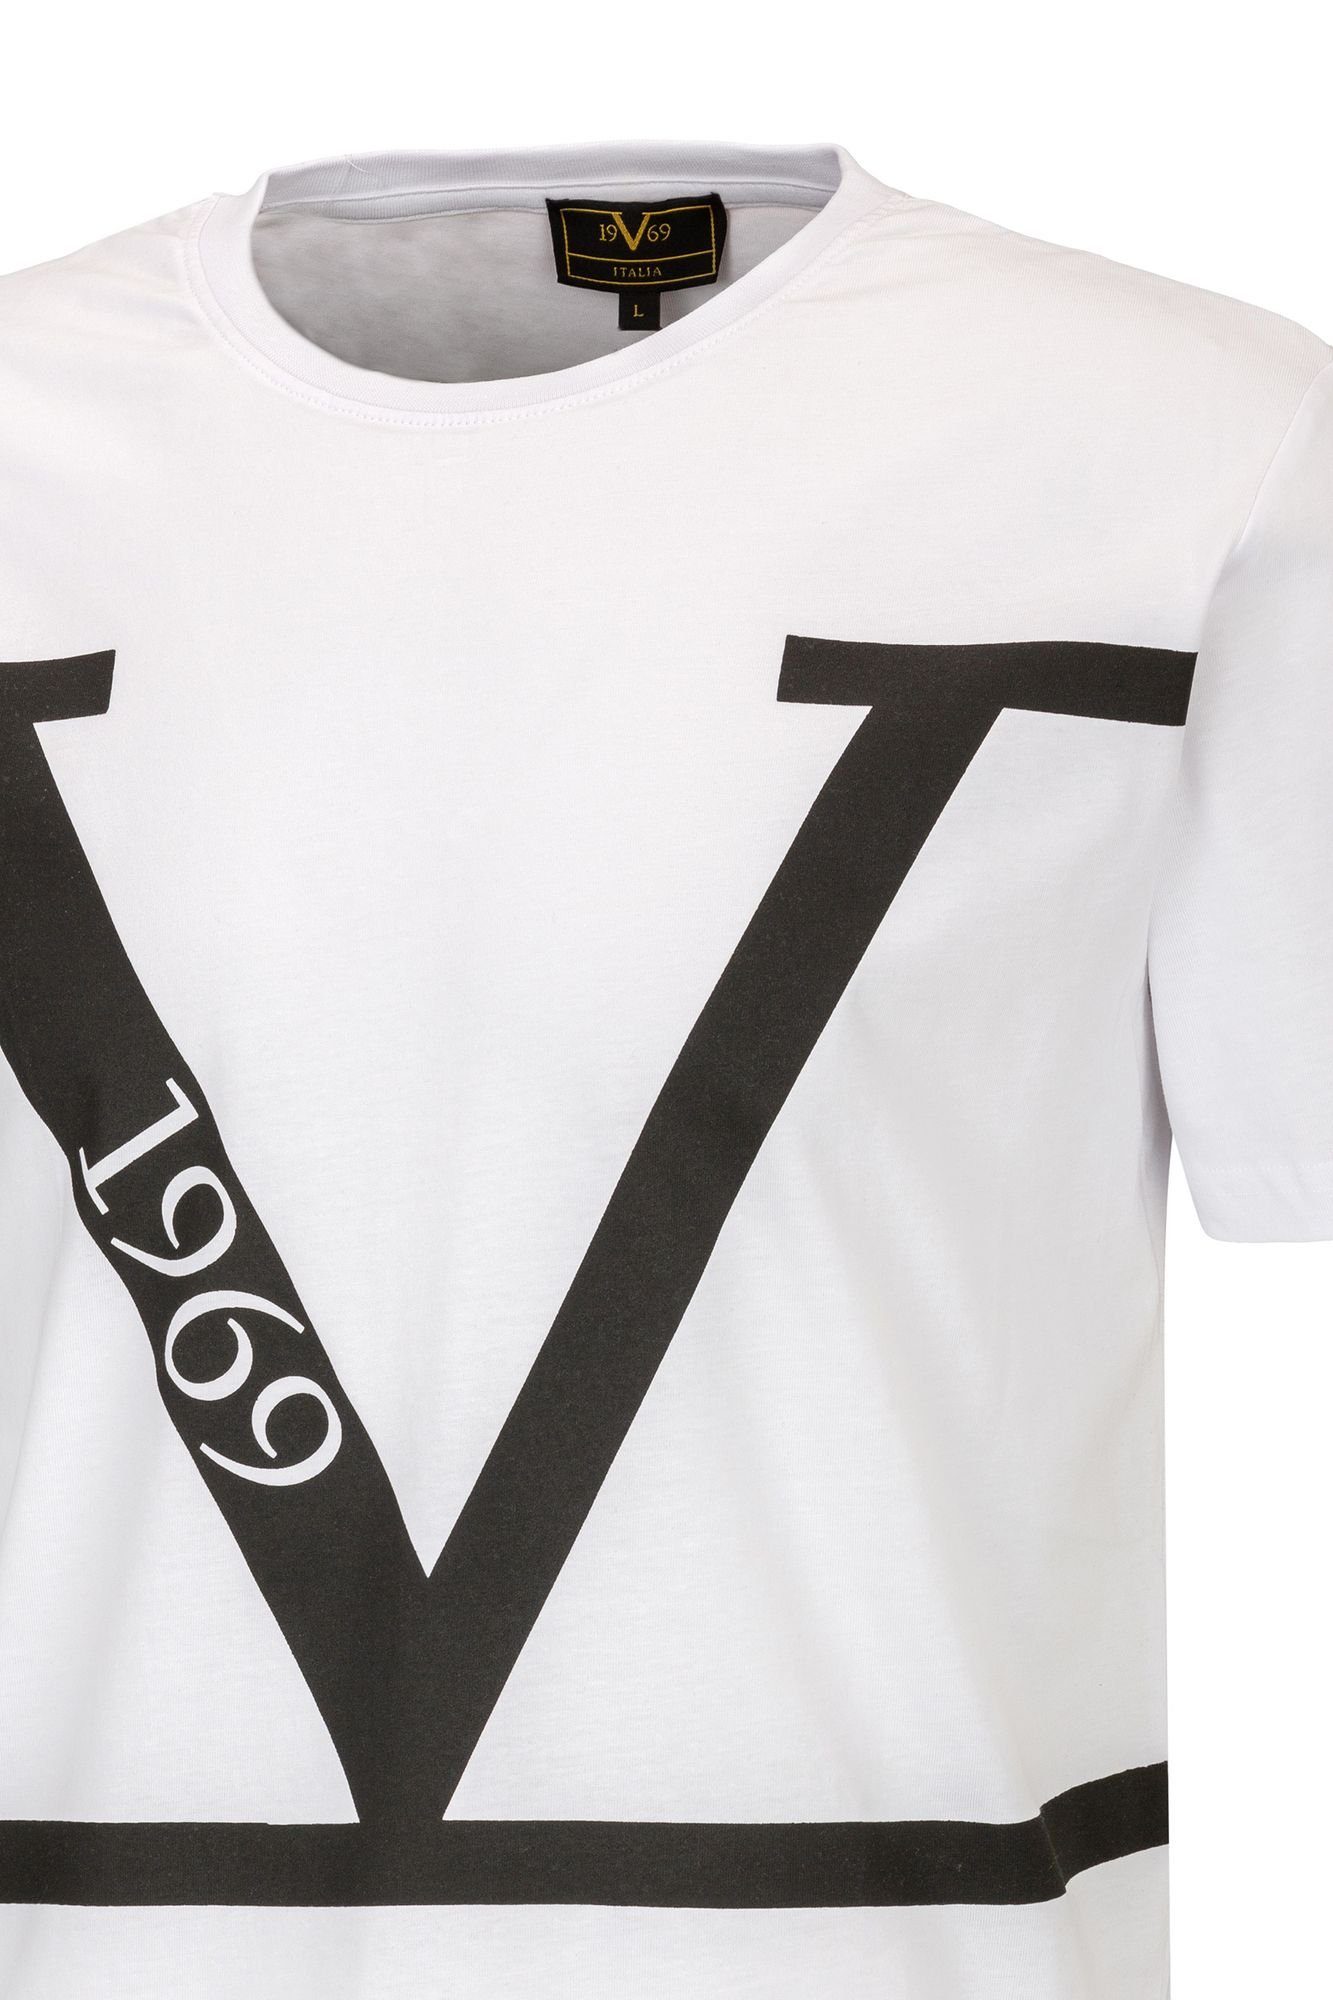 19V69 Italia T-Shirt by Gabriel Versace